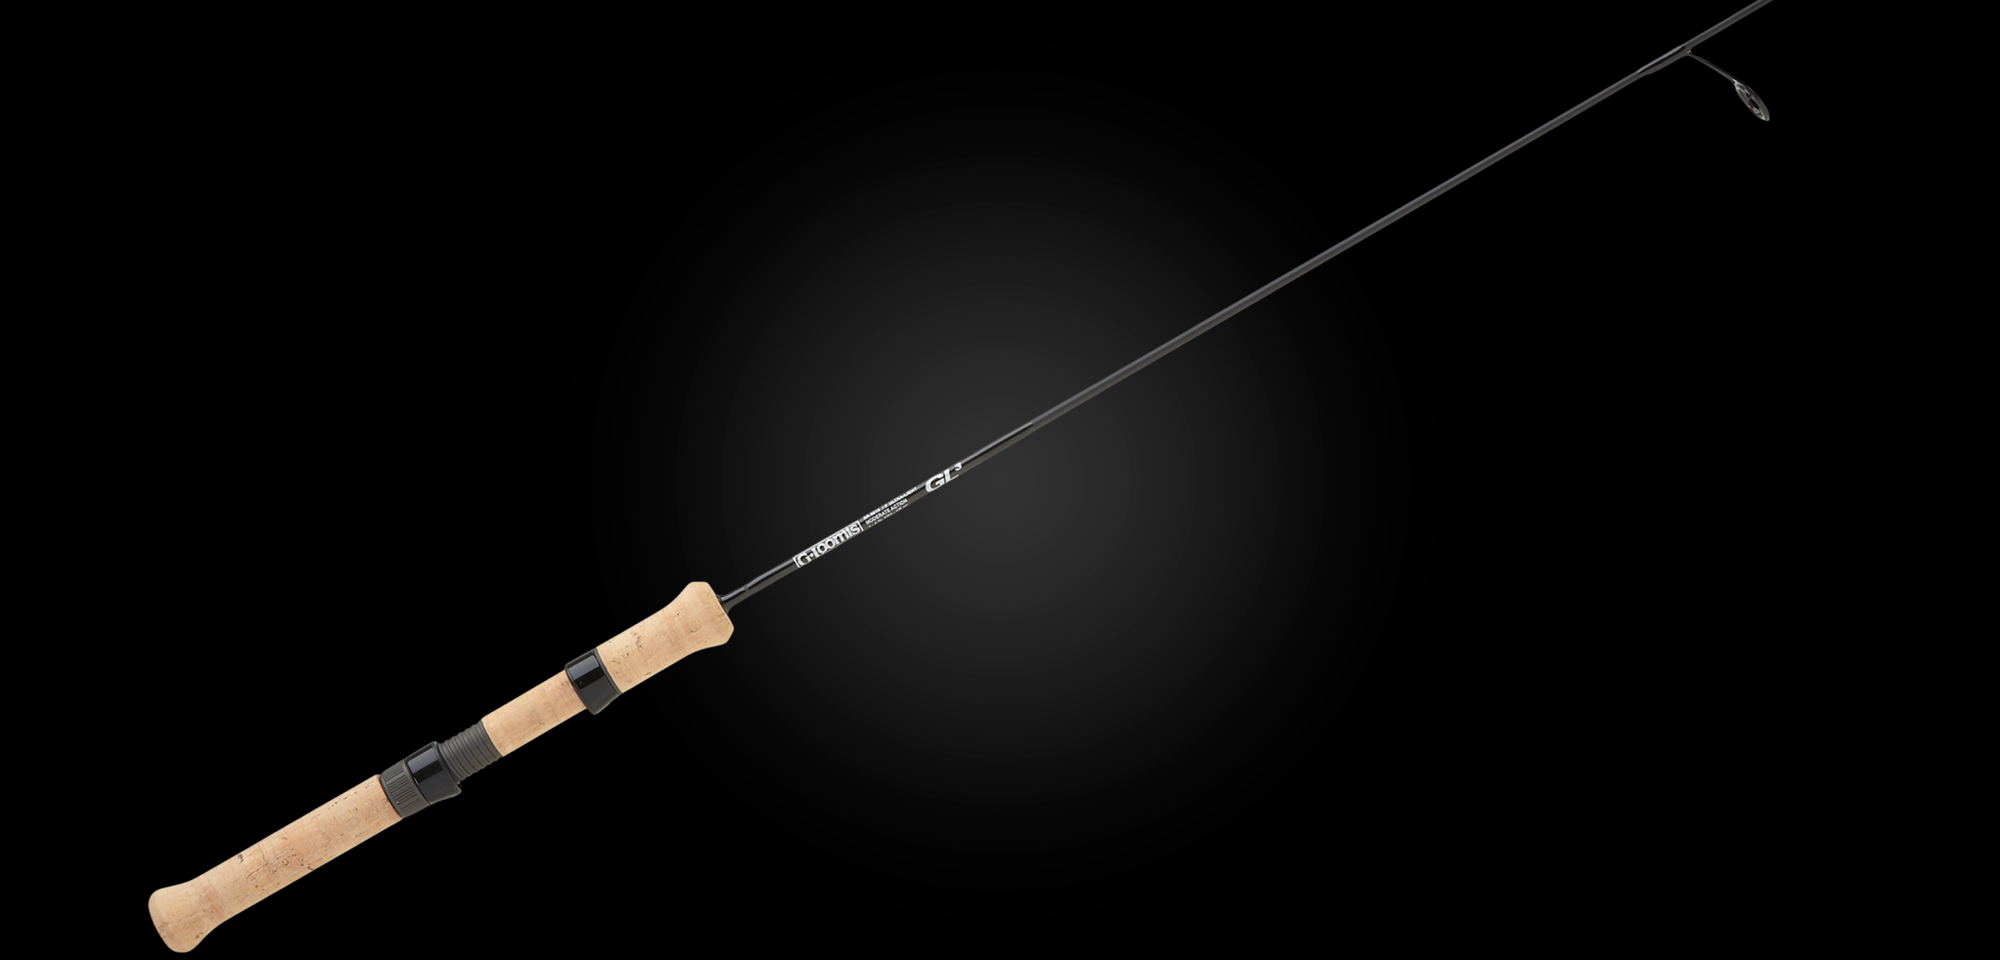 G Loomis Venture 3 Fly Fishing Fish Rod Pole Reel